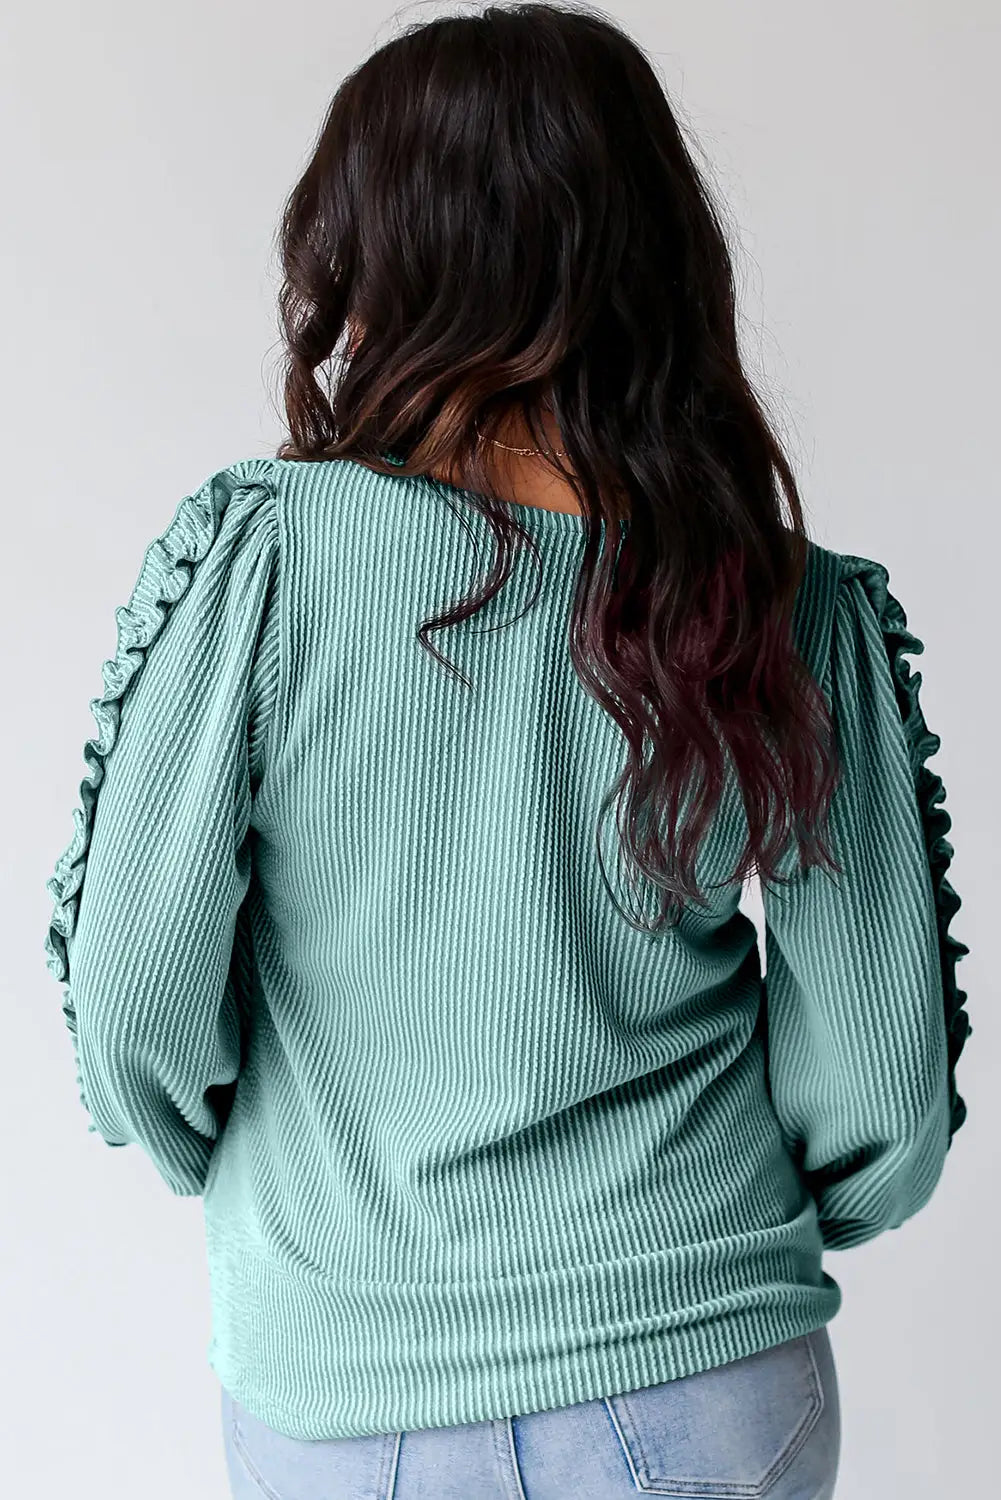 Moonlight jade ruffled sleeve corded textured blouse - blouses & shirts